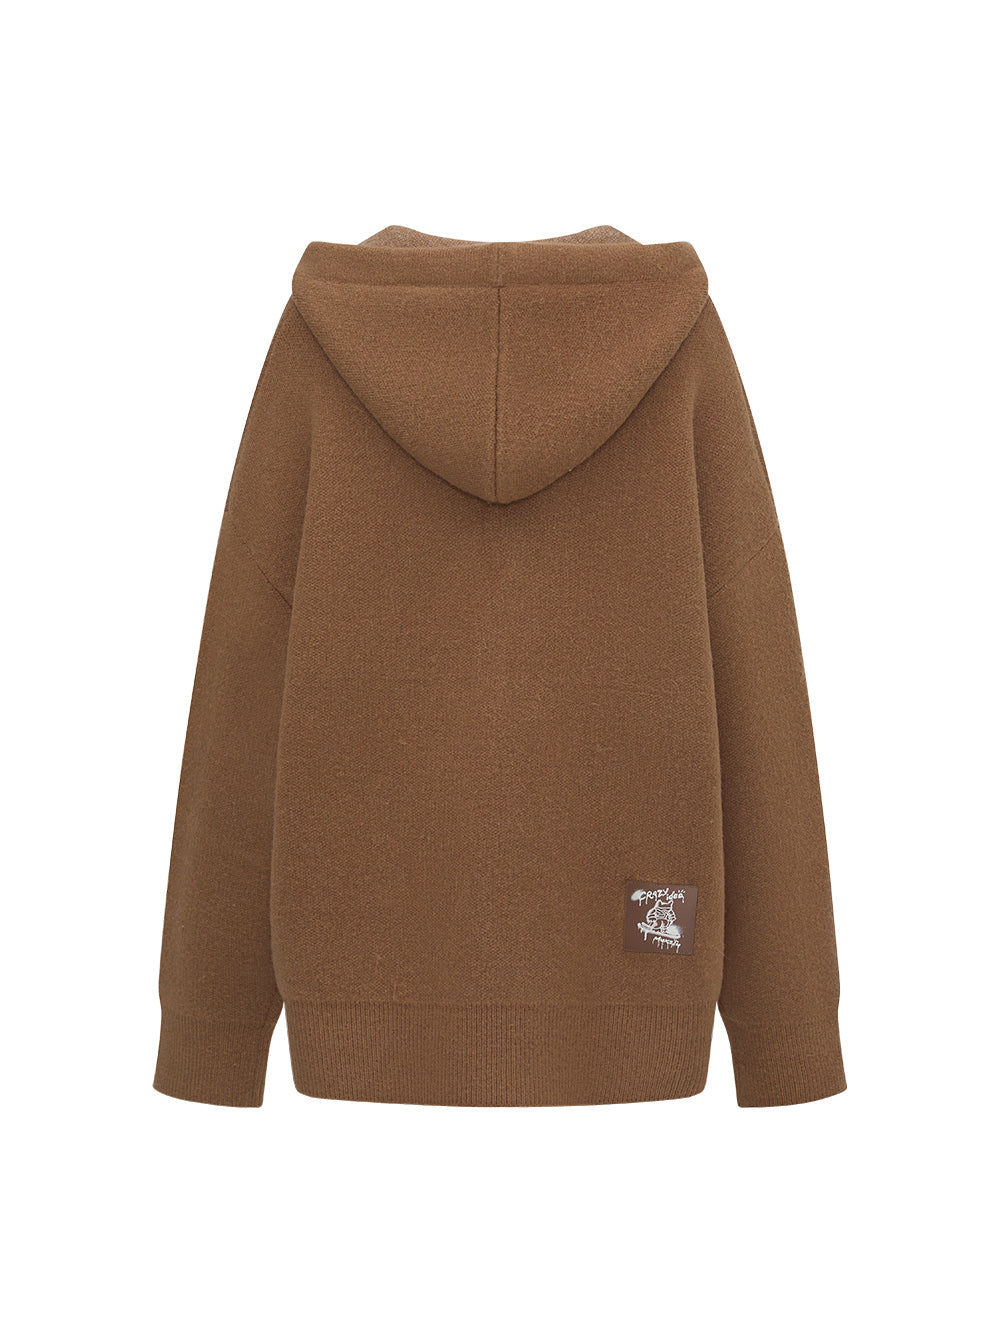 MUKZIN Color Blocking Knited Cap Apaca Sweater